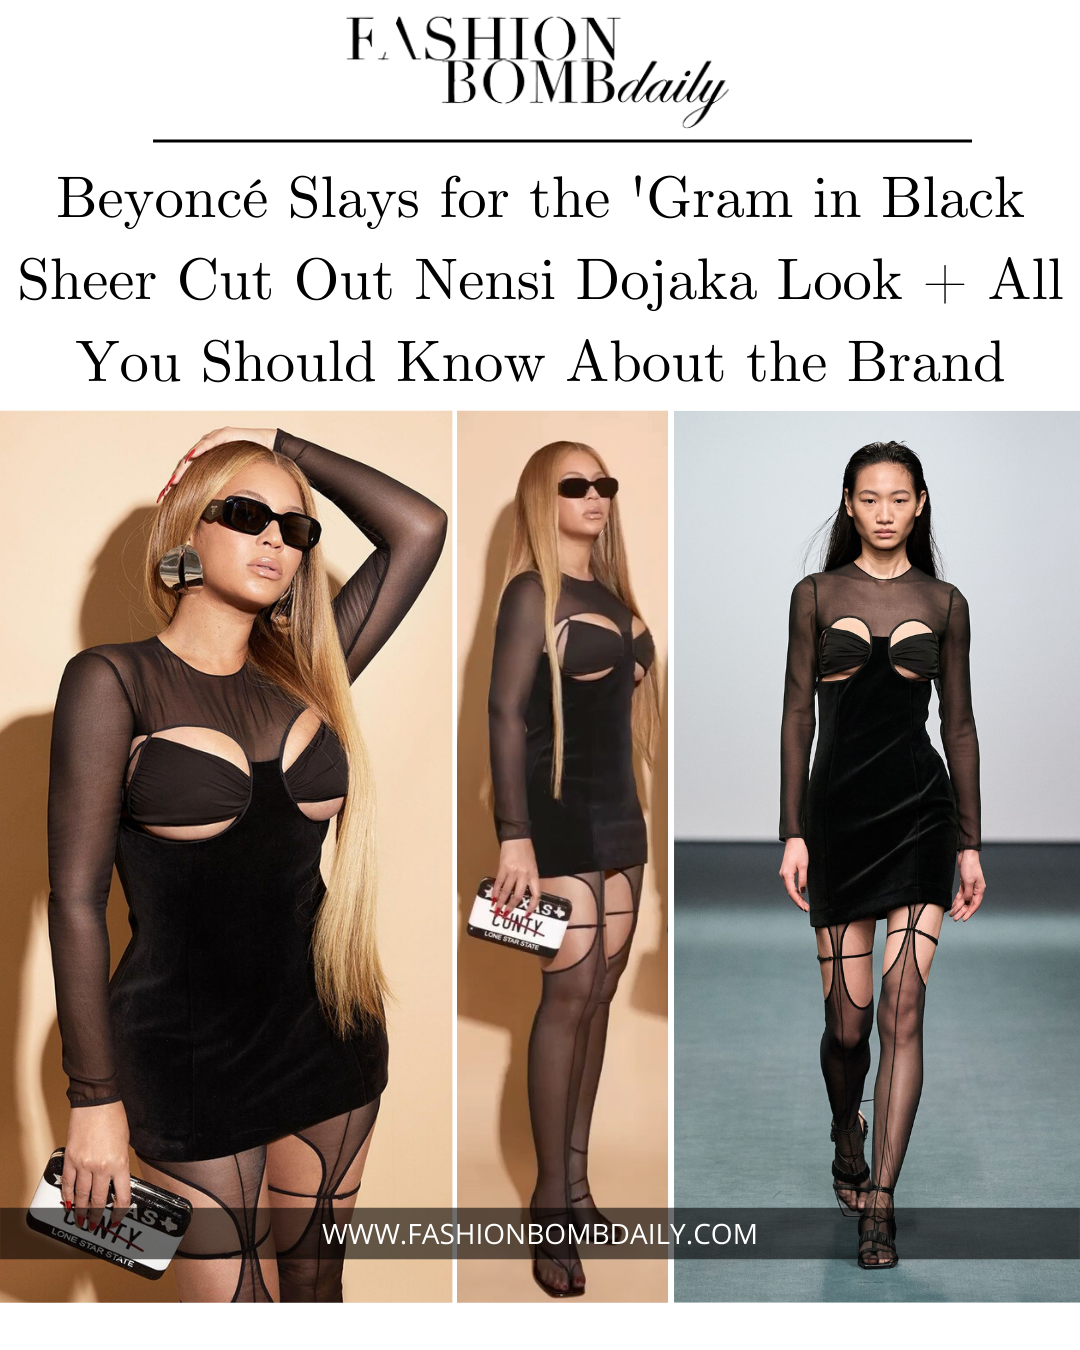 Beyoncé Slays for the 'Gram in Black Sheer Cut Out Nensi Dojaka